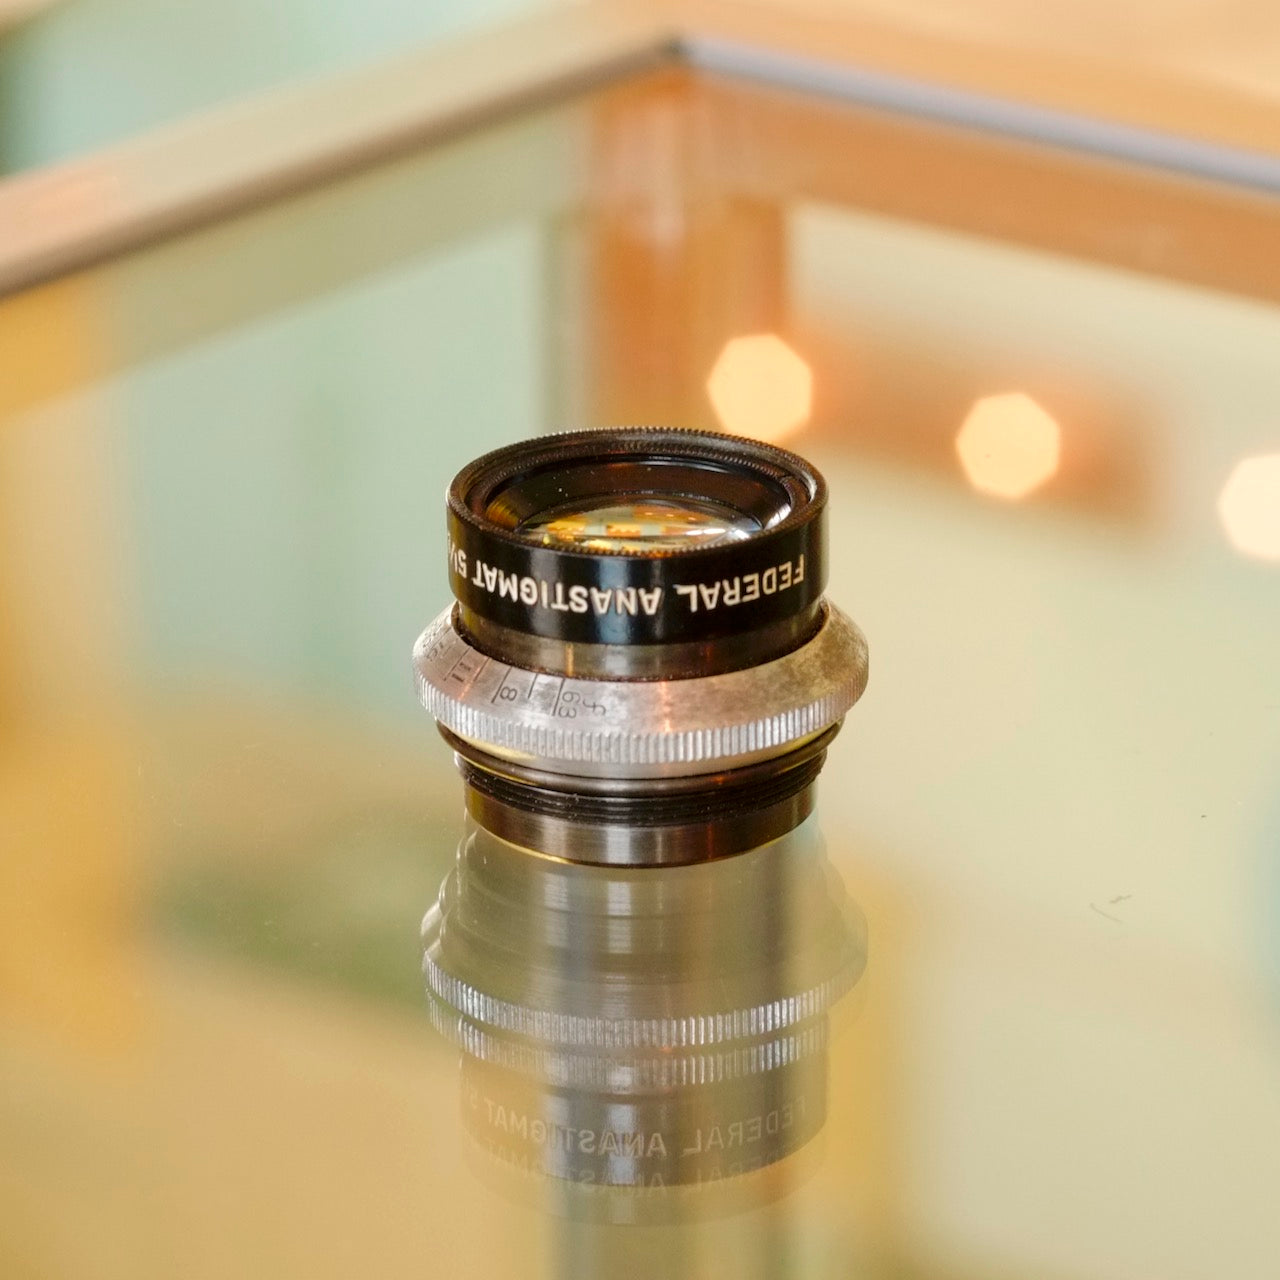 Federal Octar 5.5 inch f6.3 enlarger lens